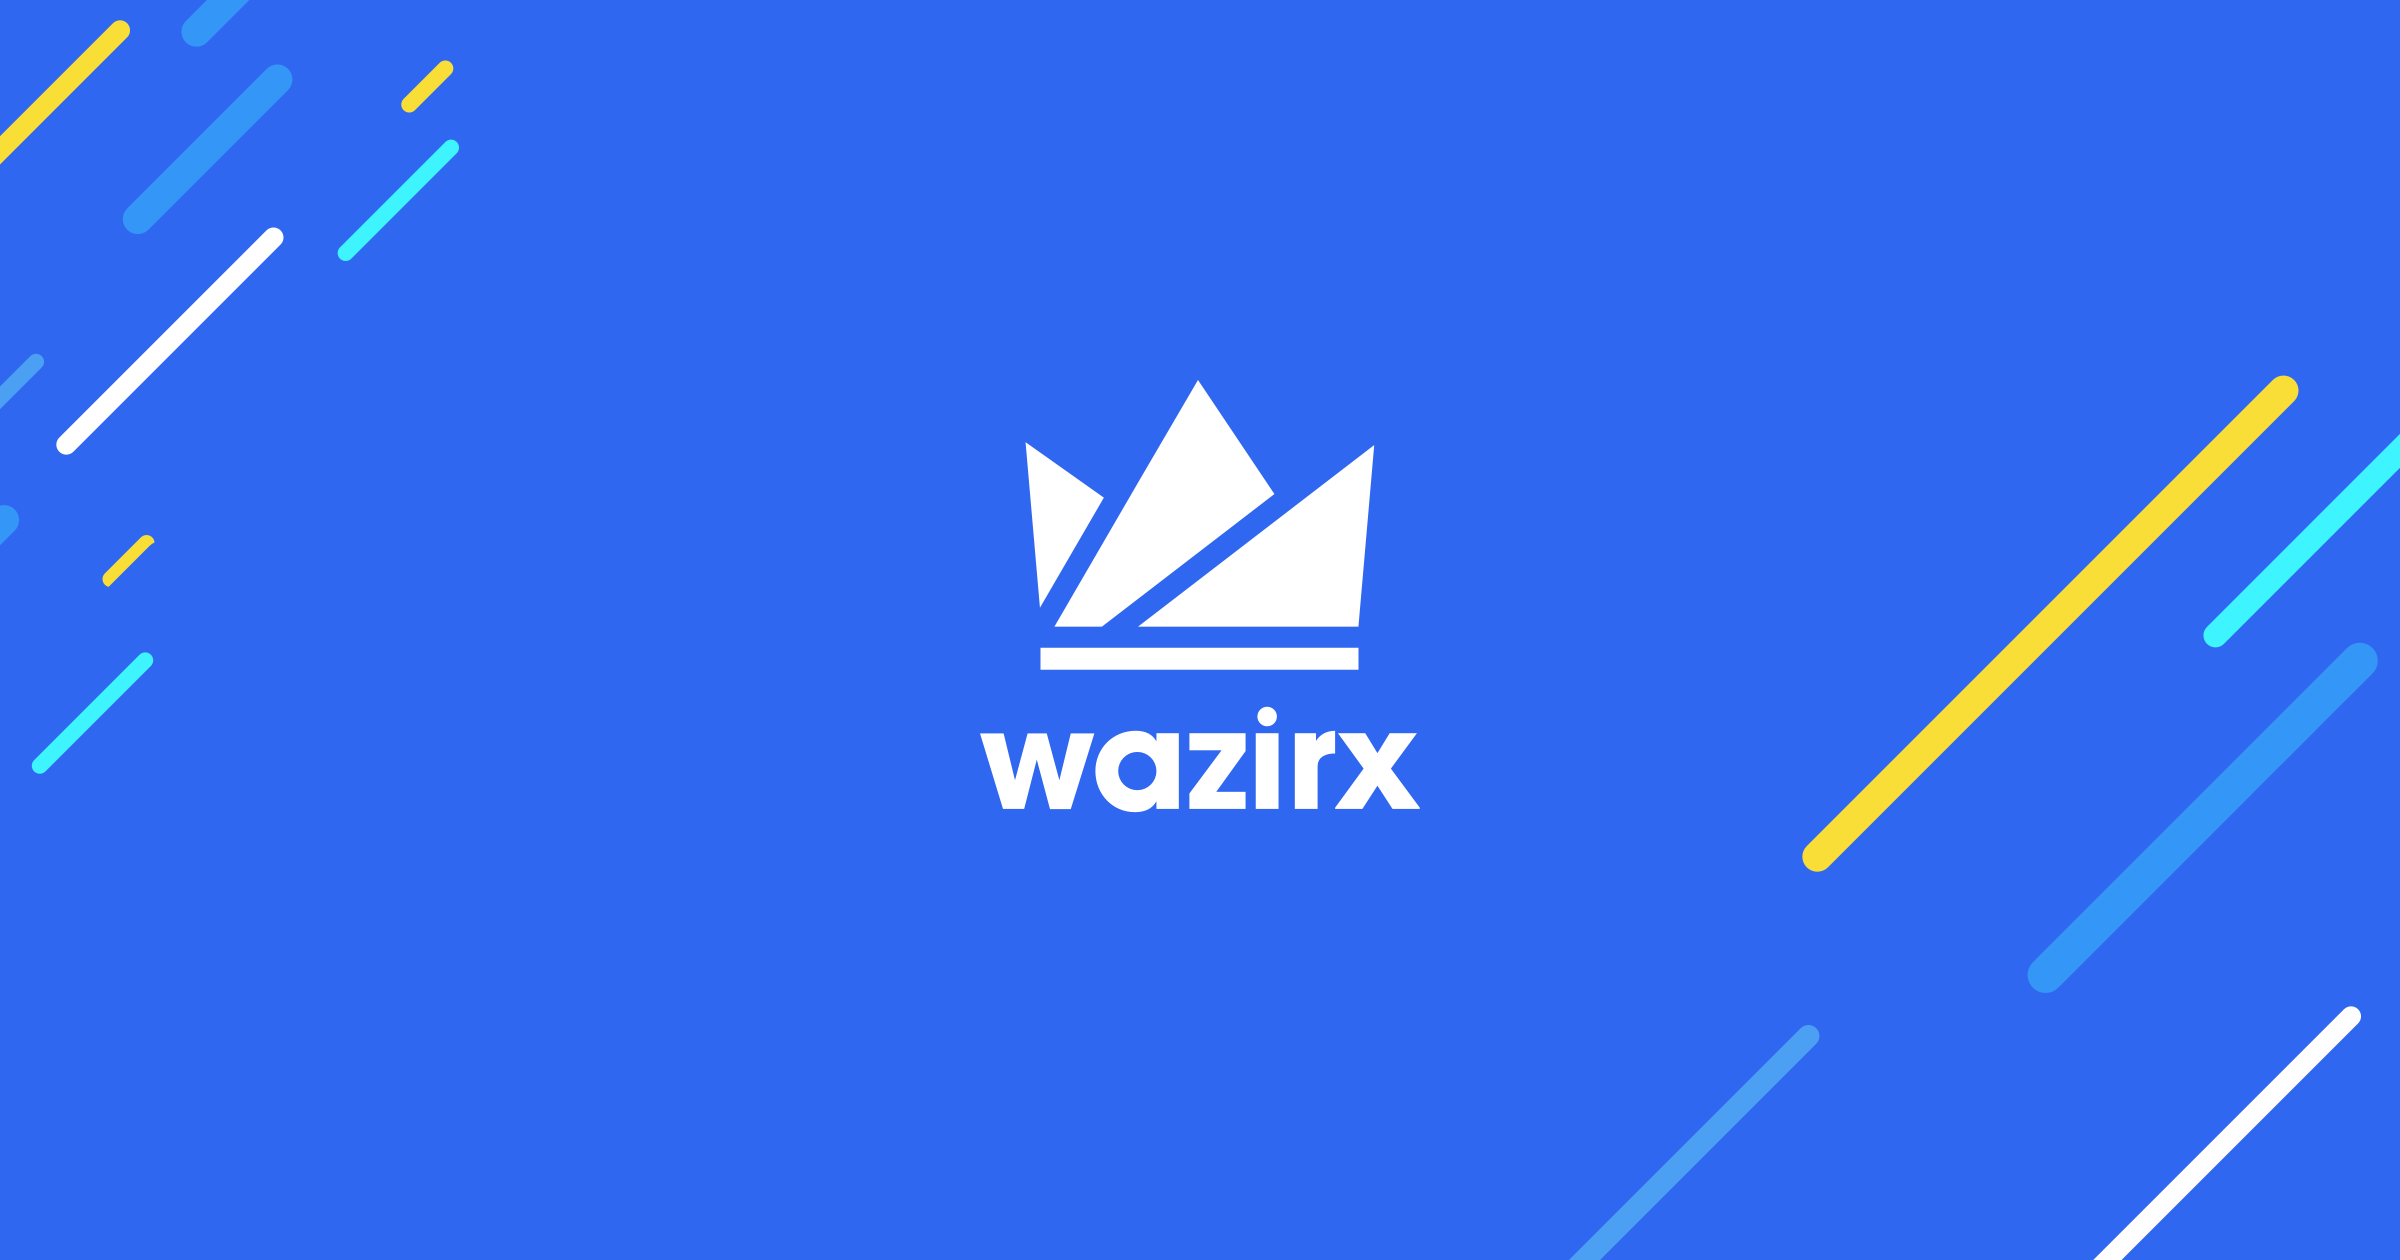 binance-terminates-wallet-services-for-wazirx